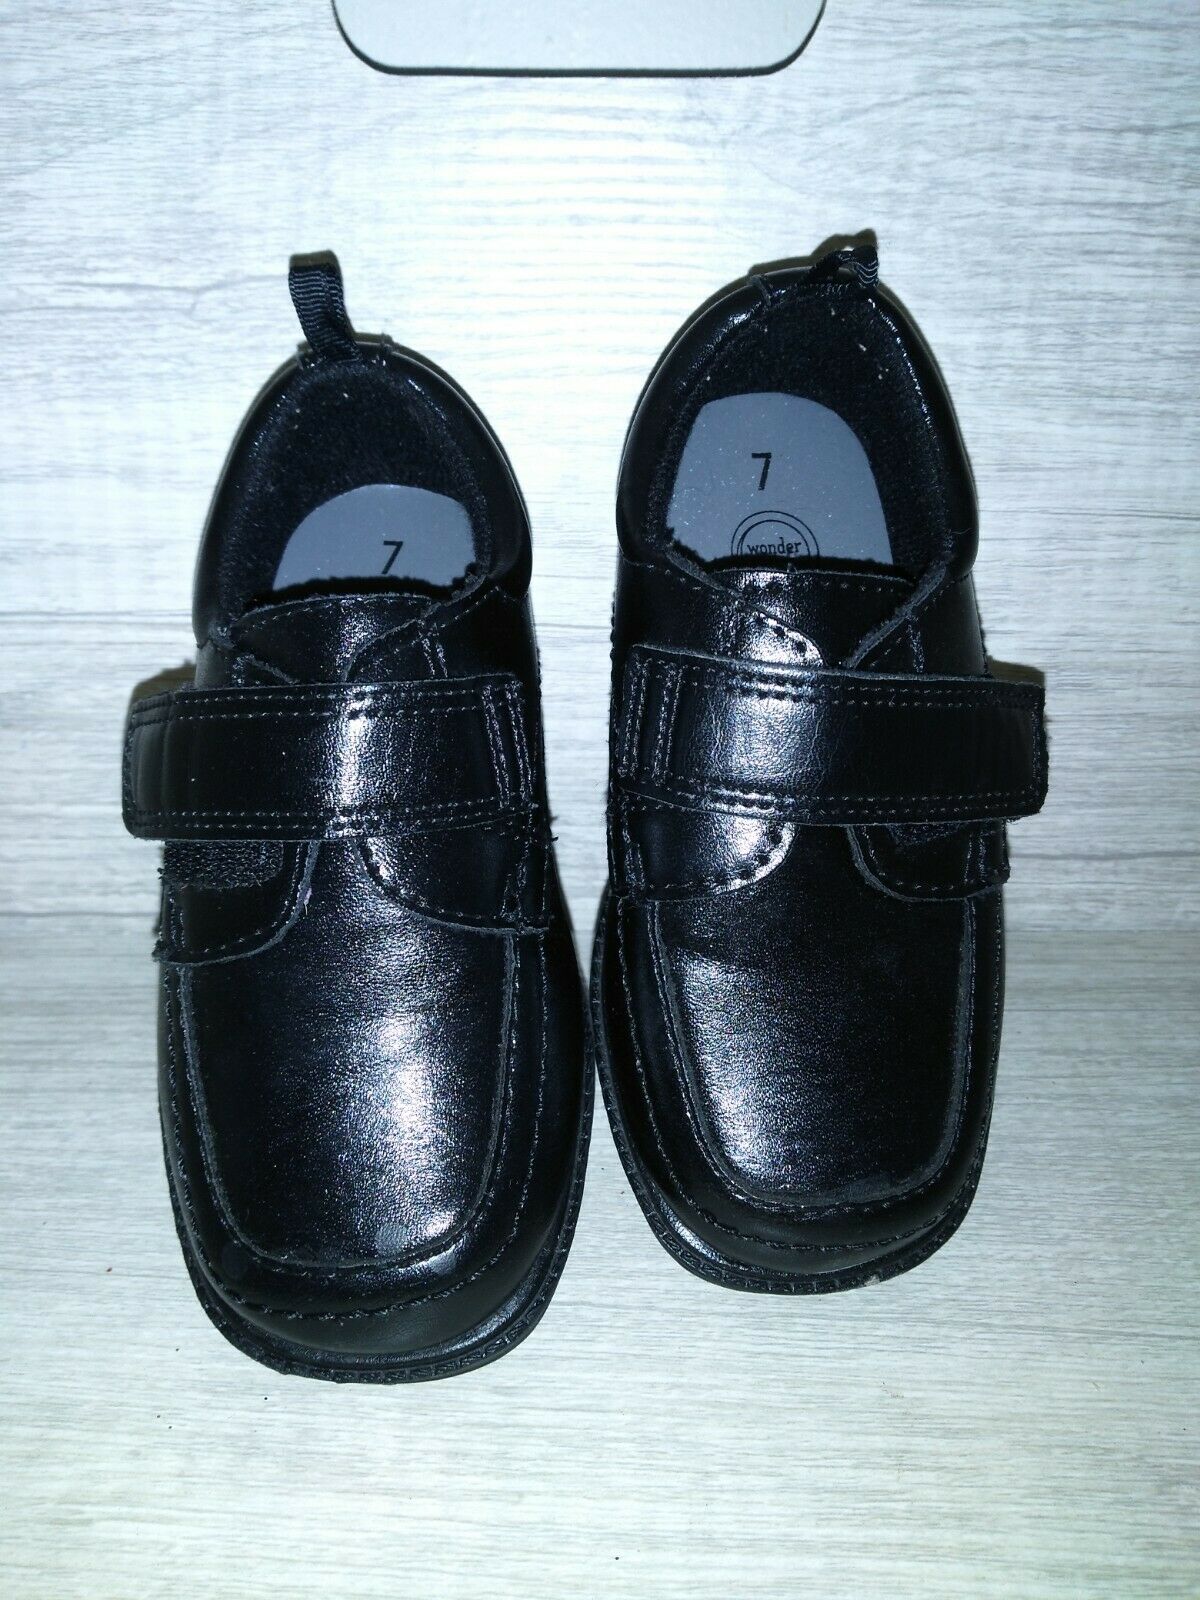 Toddler boy's black dress shoes